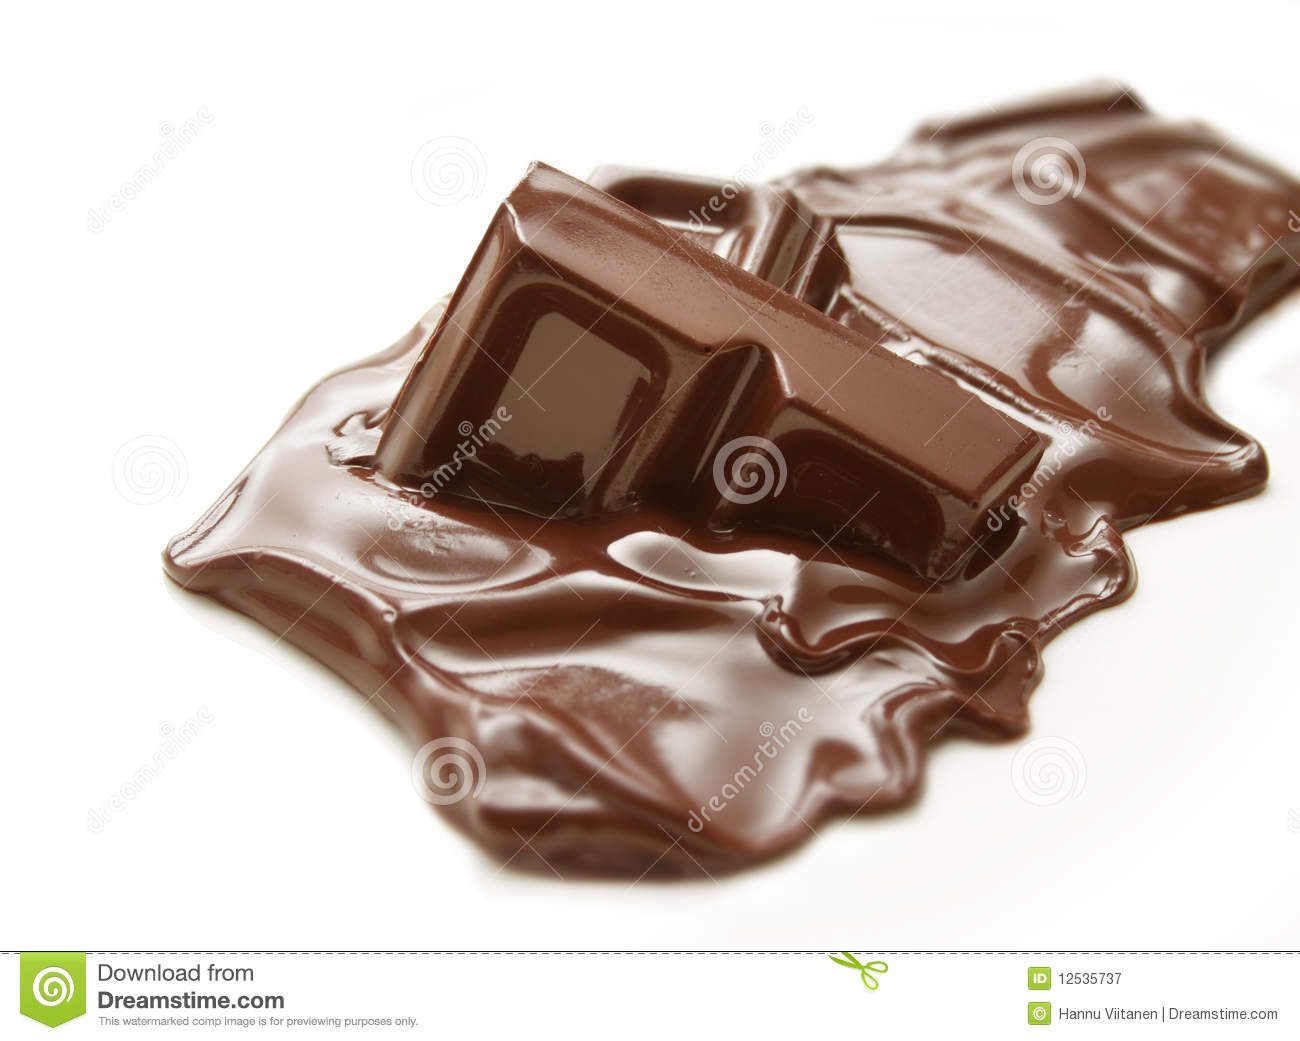 Melting Chocolate Bar Png - Melting Chocolate Bar Royalty Free, Transparent background PNG HD thumbnail